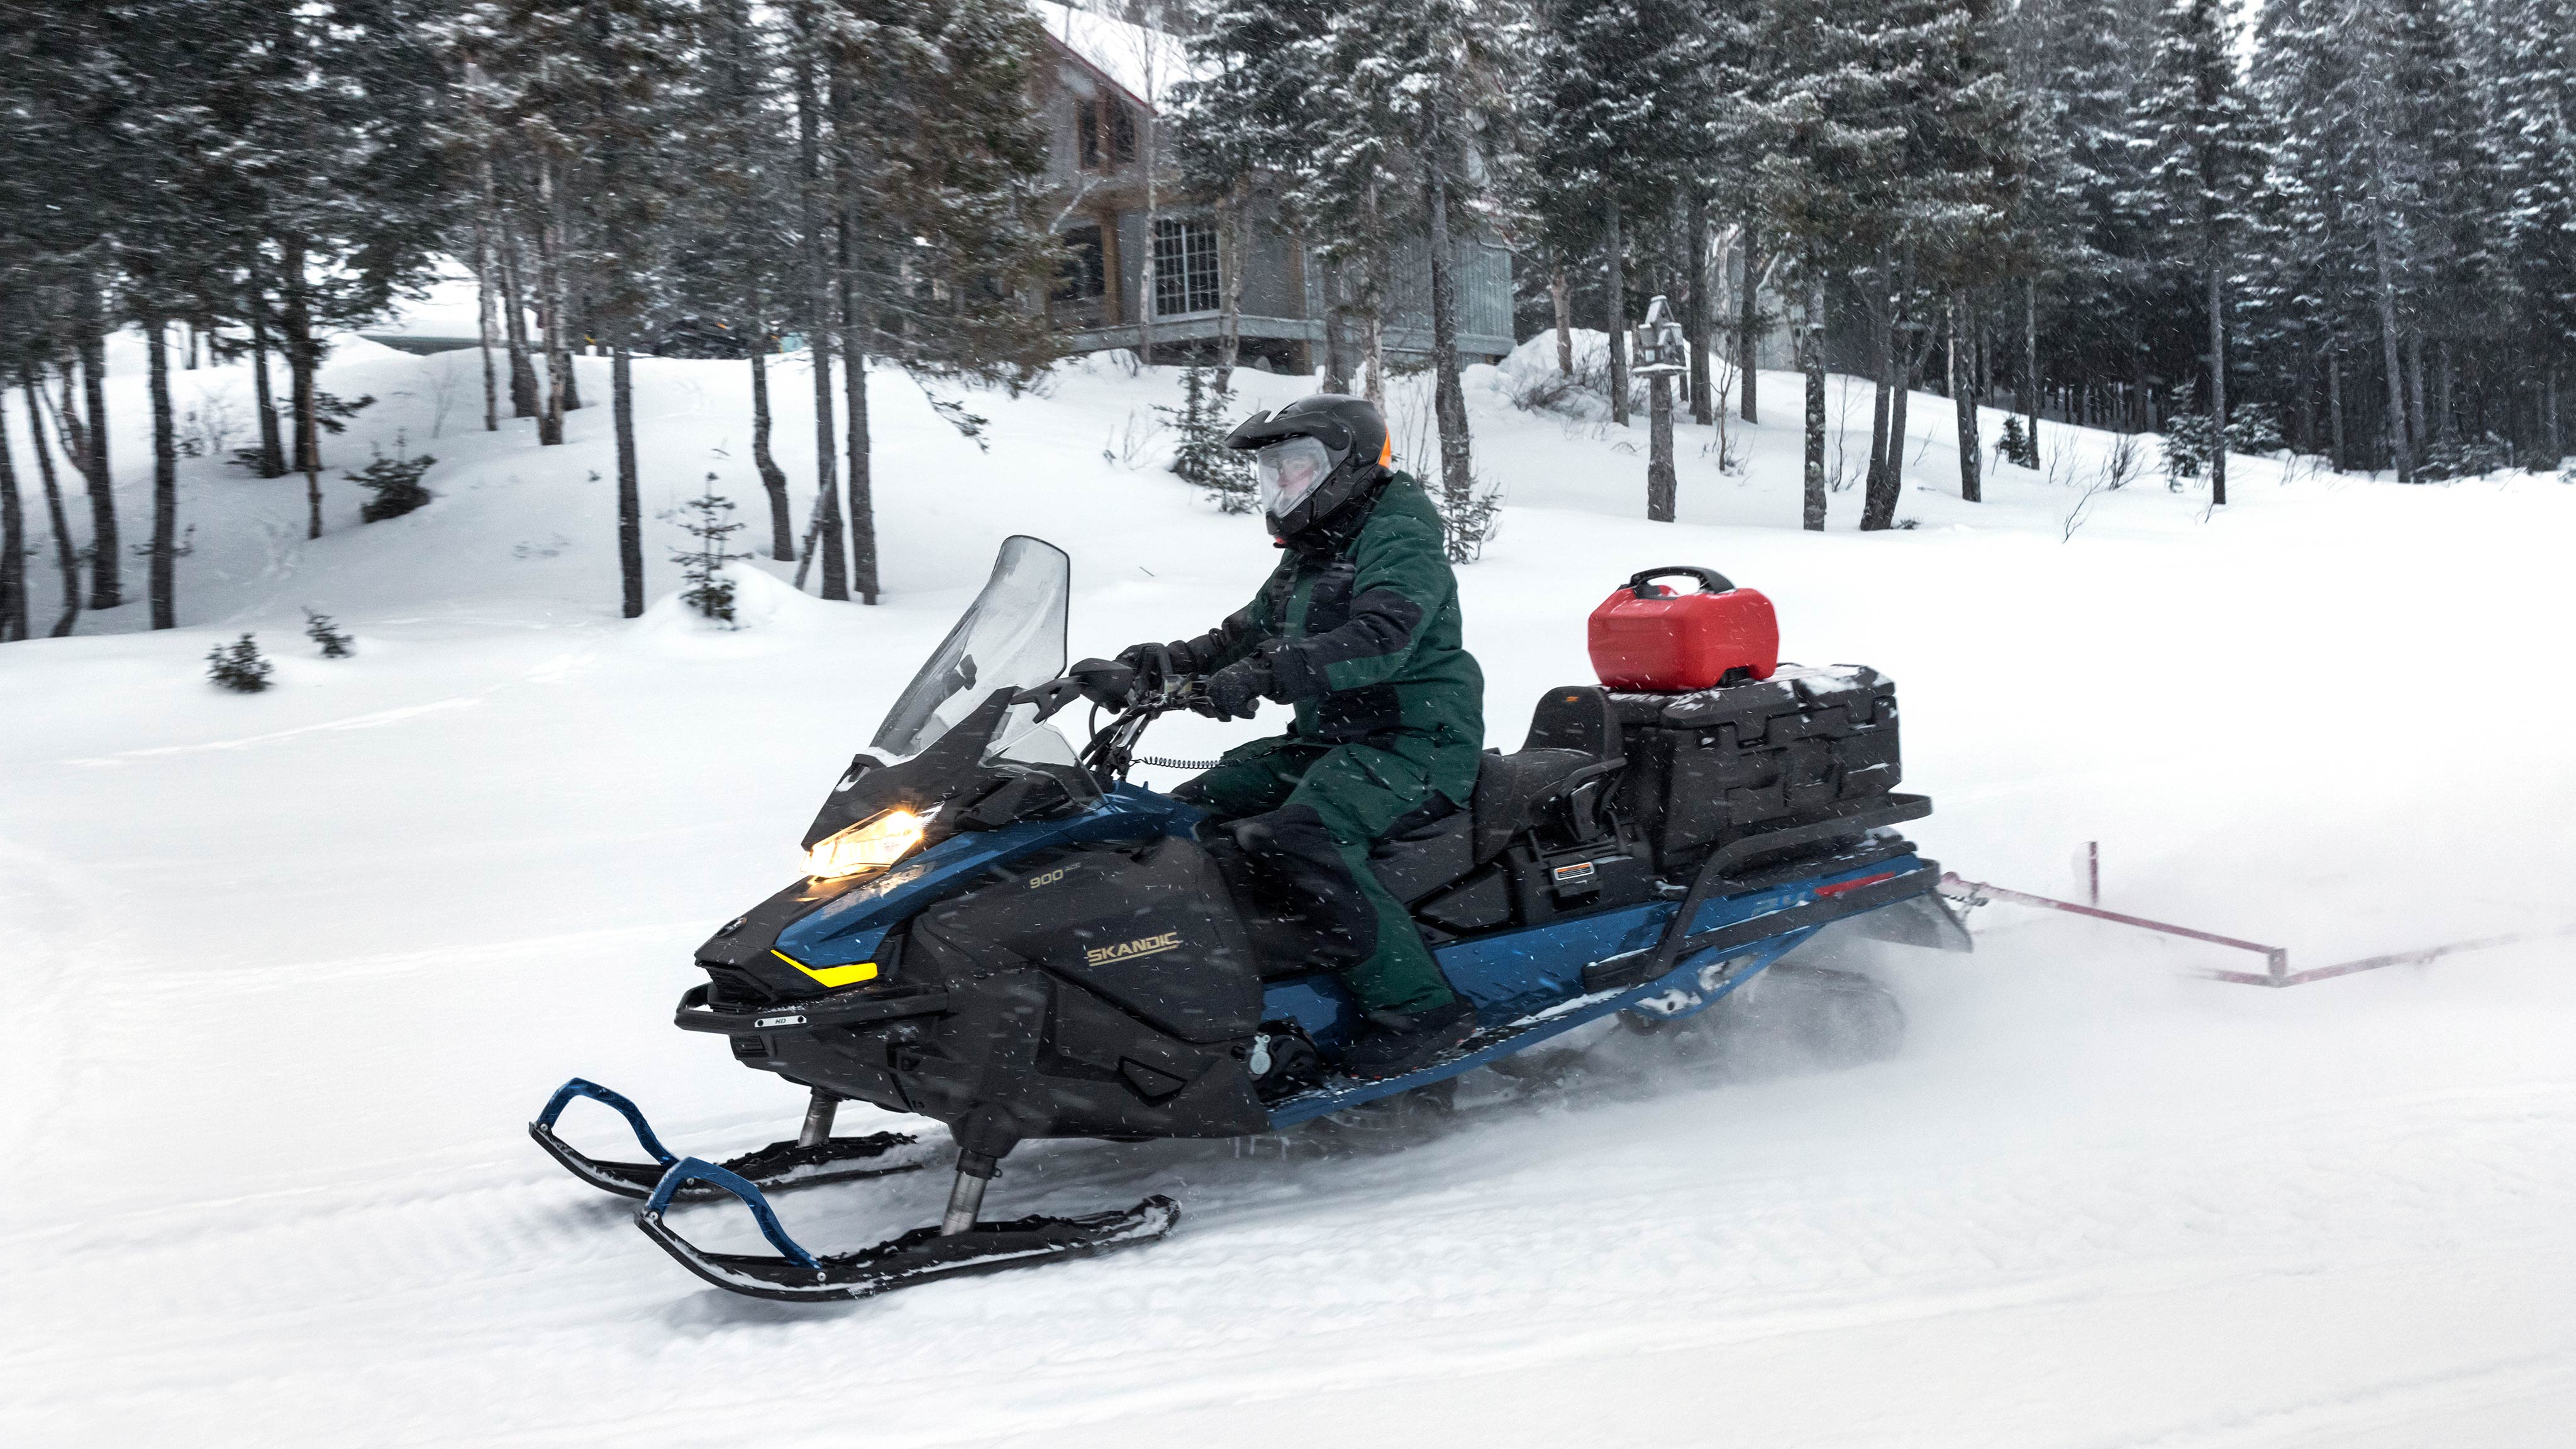 2025 Ski-Doo Skandic sport utility snowmobile in action